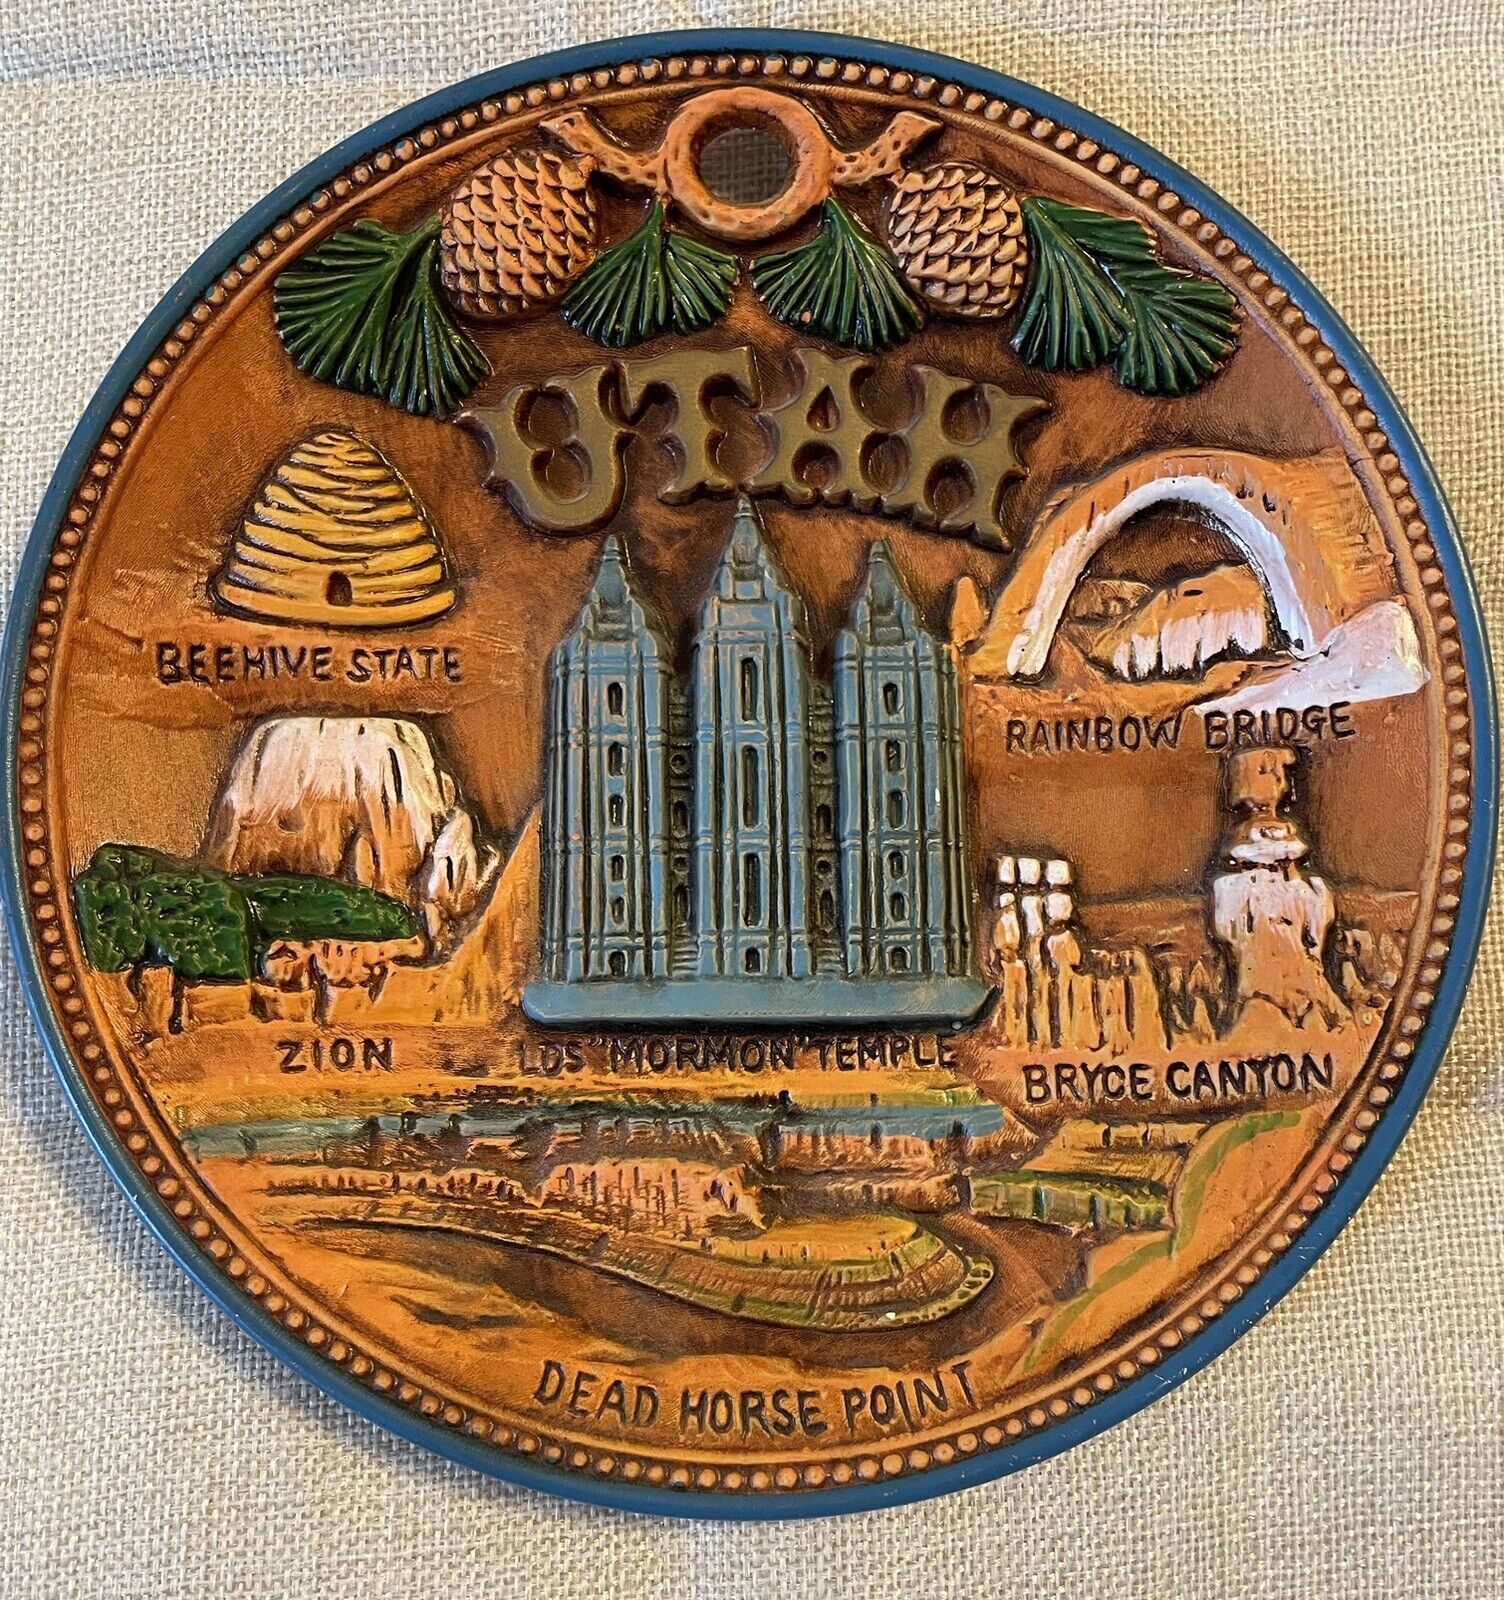 State of UTAH Decorative Souvenir Plate 3 D Ceramic Plate 8 1/4 inch Diameter